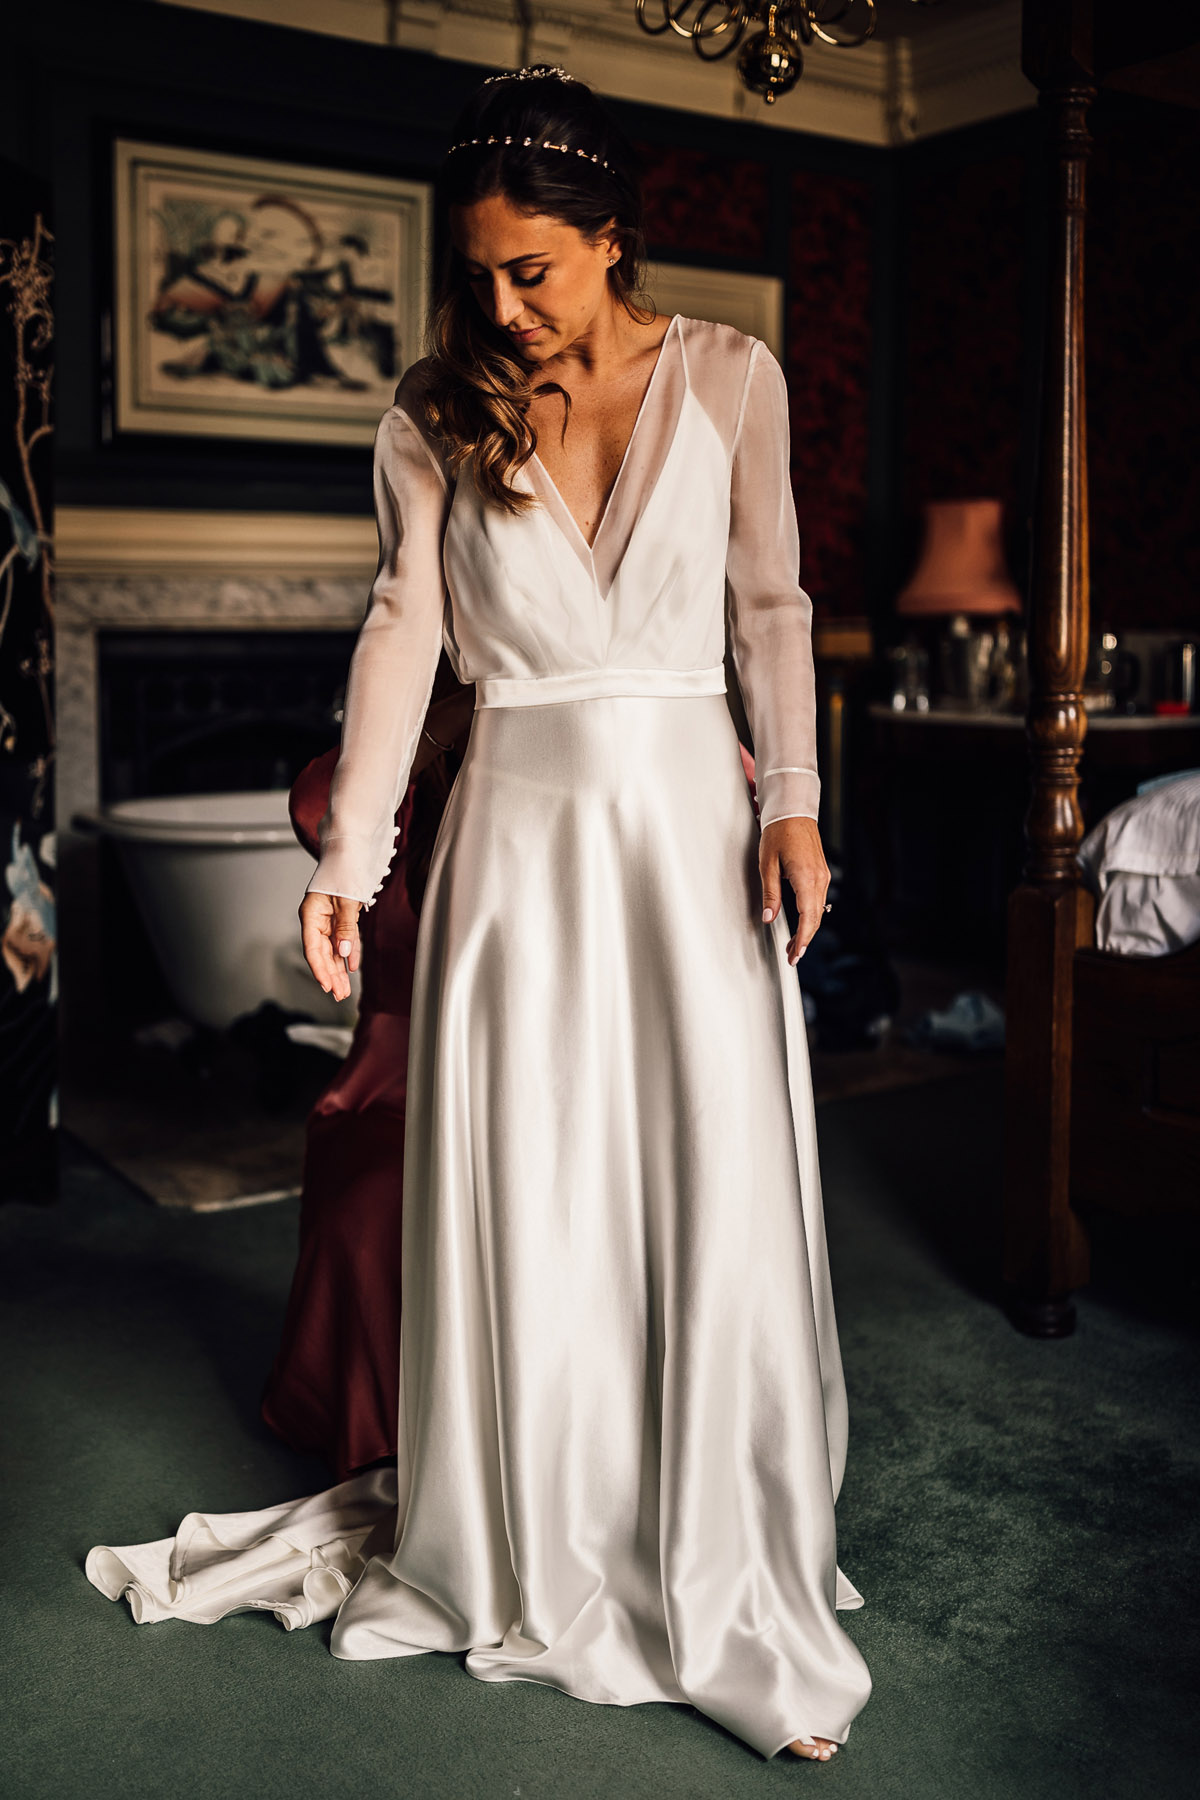 Andrea Hawkes Bridal wedding dress and veil